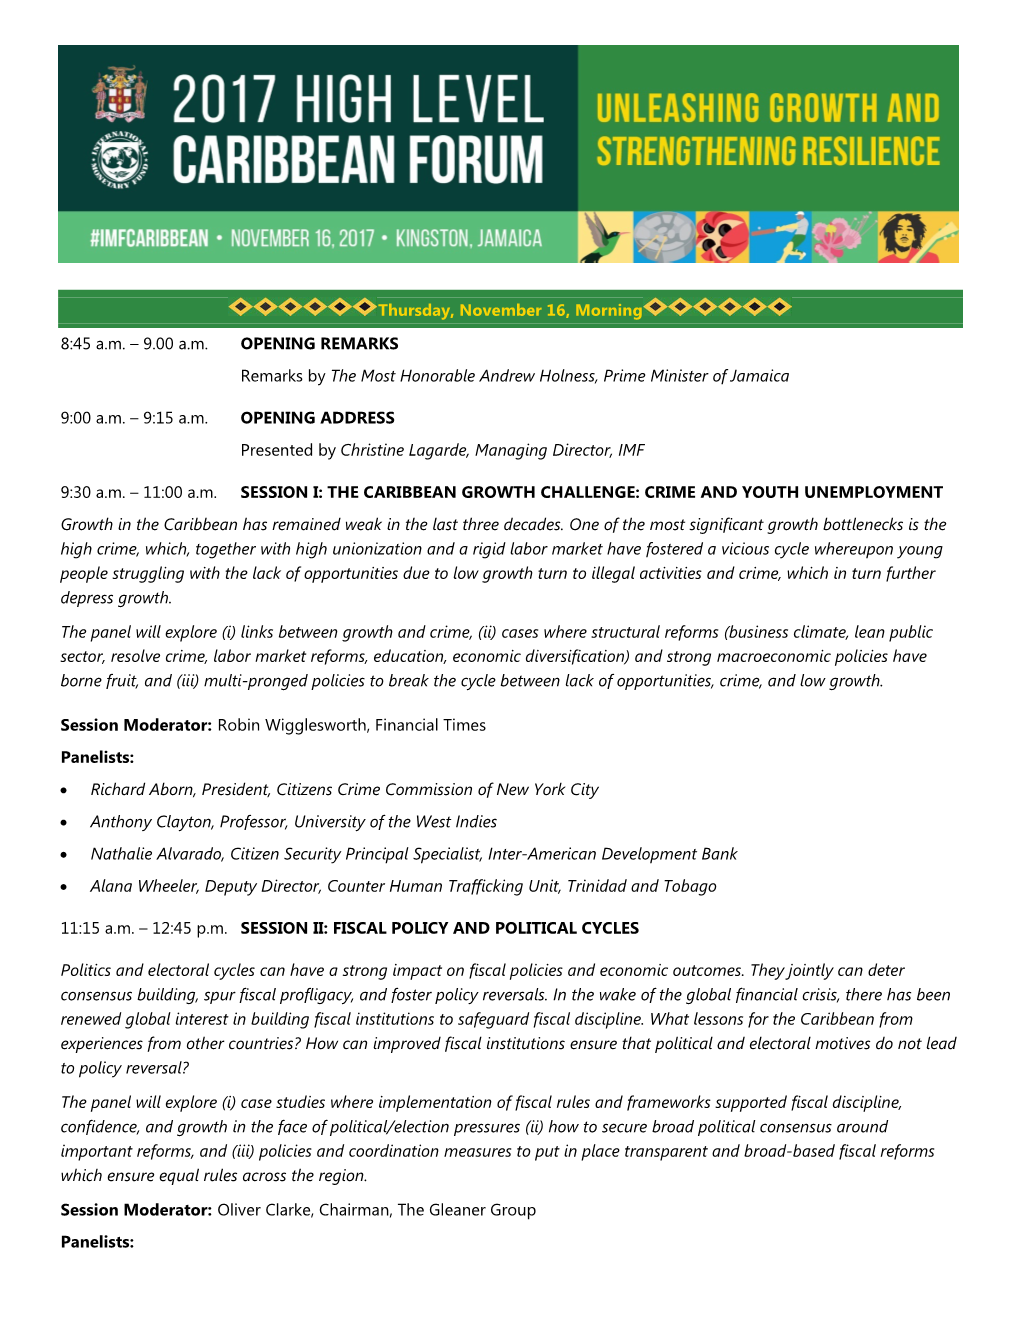 217 High Level Caribbean Forum